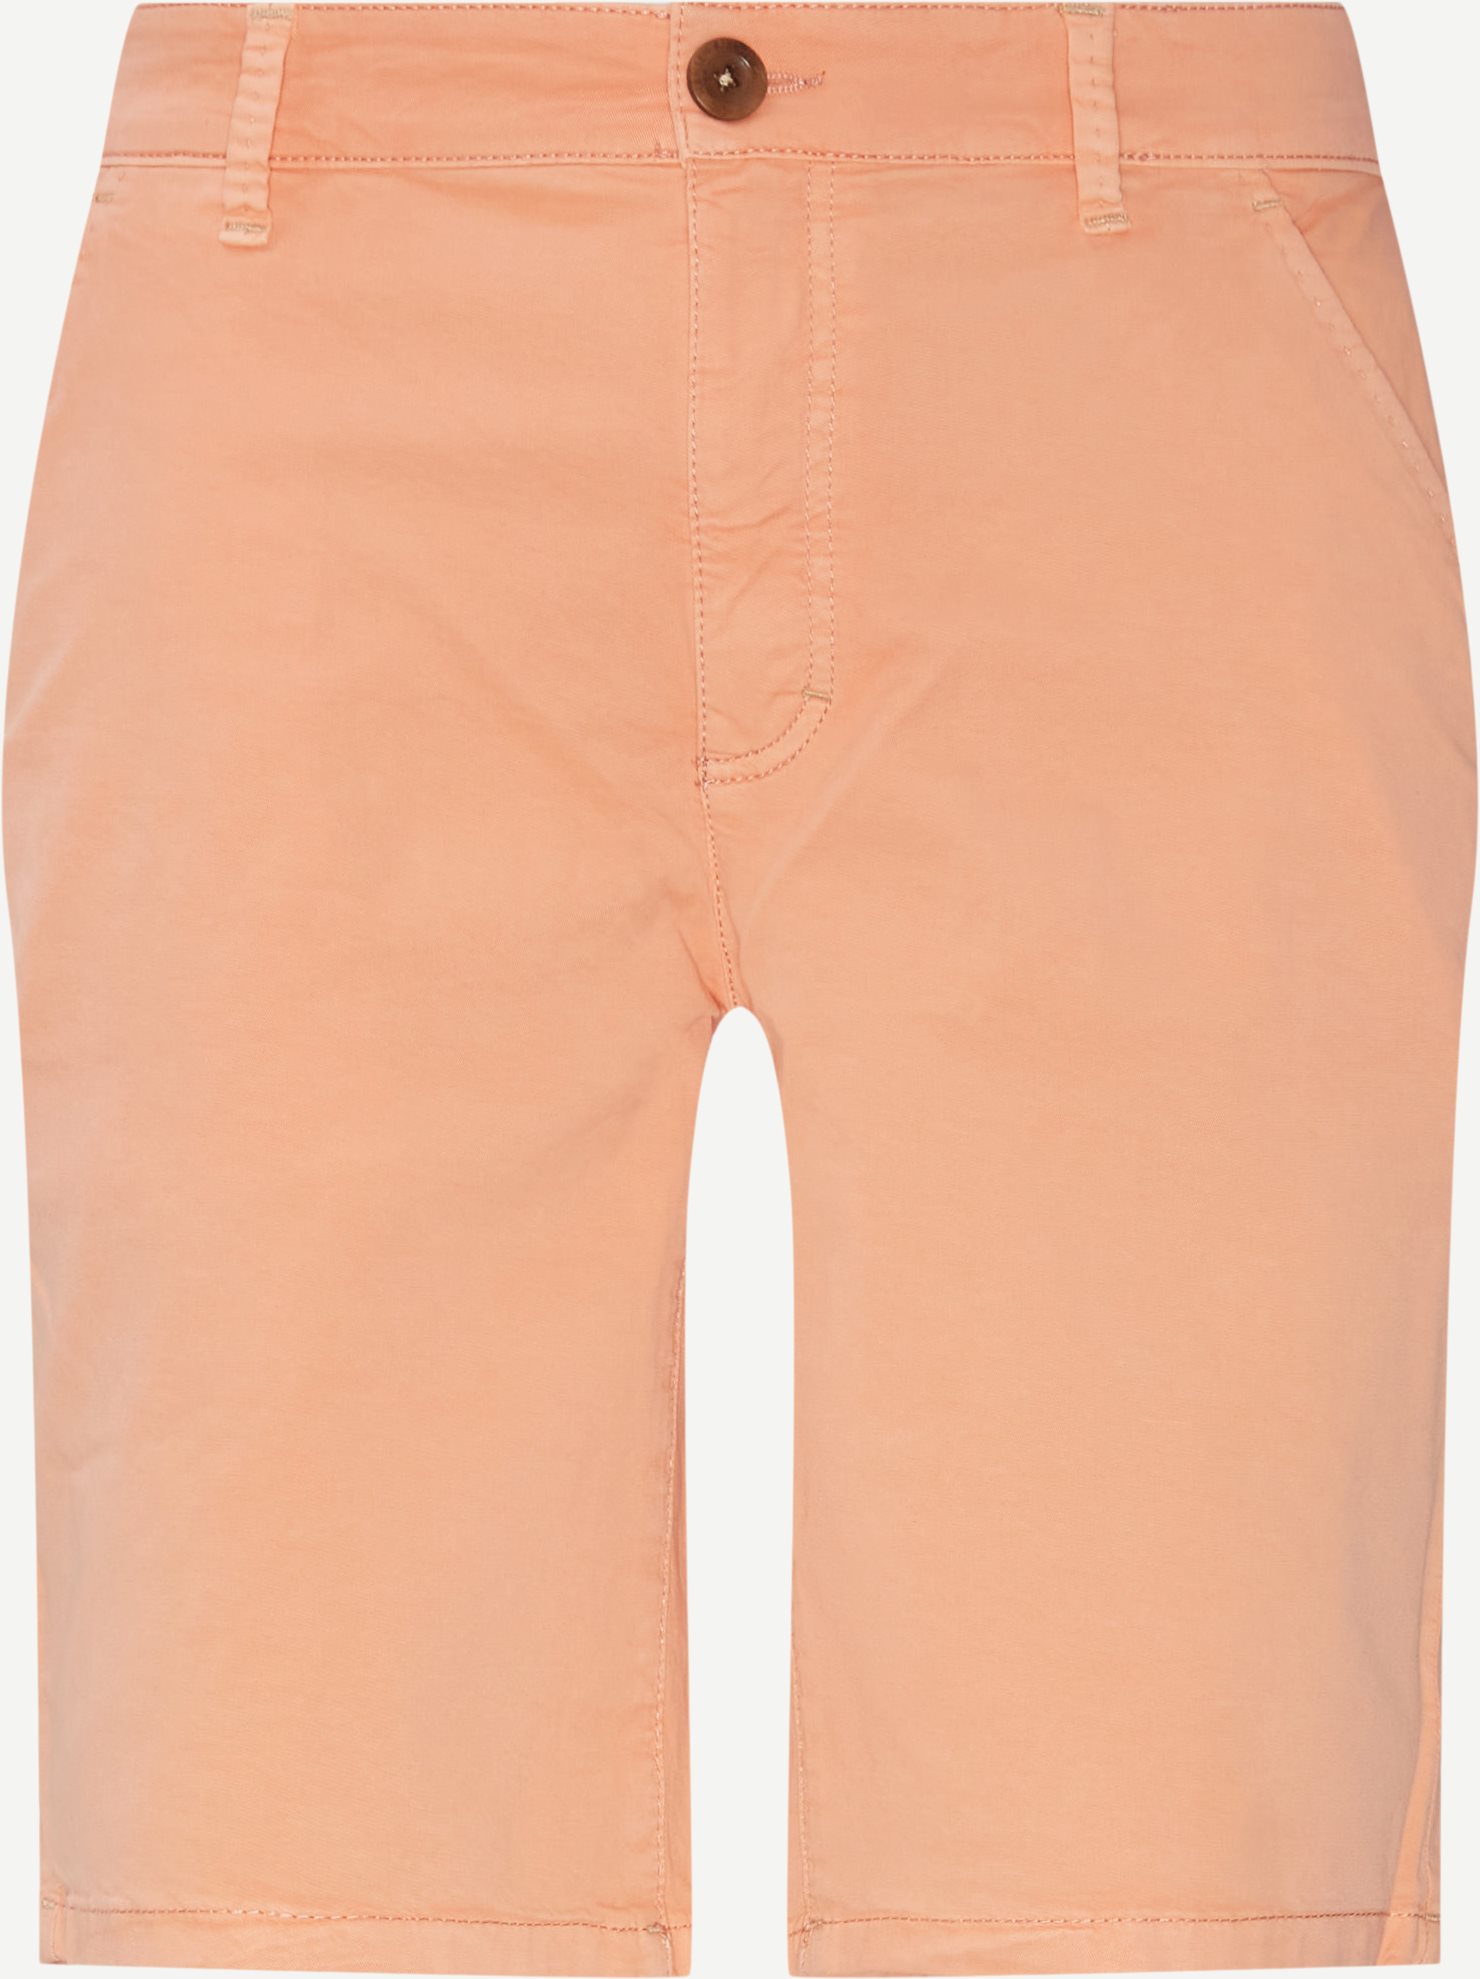 Shorts - Regular fit - Orange